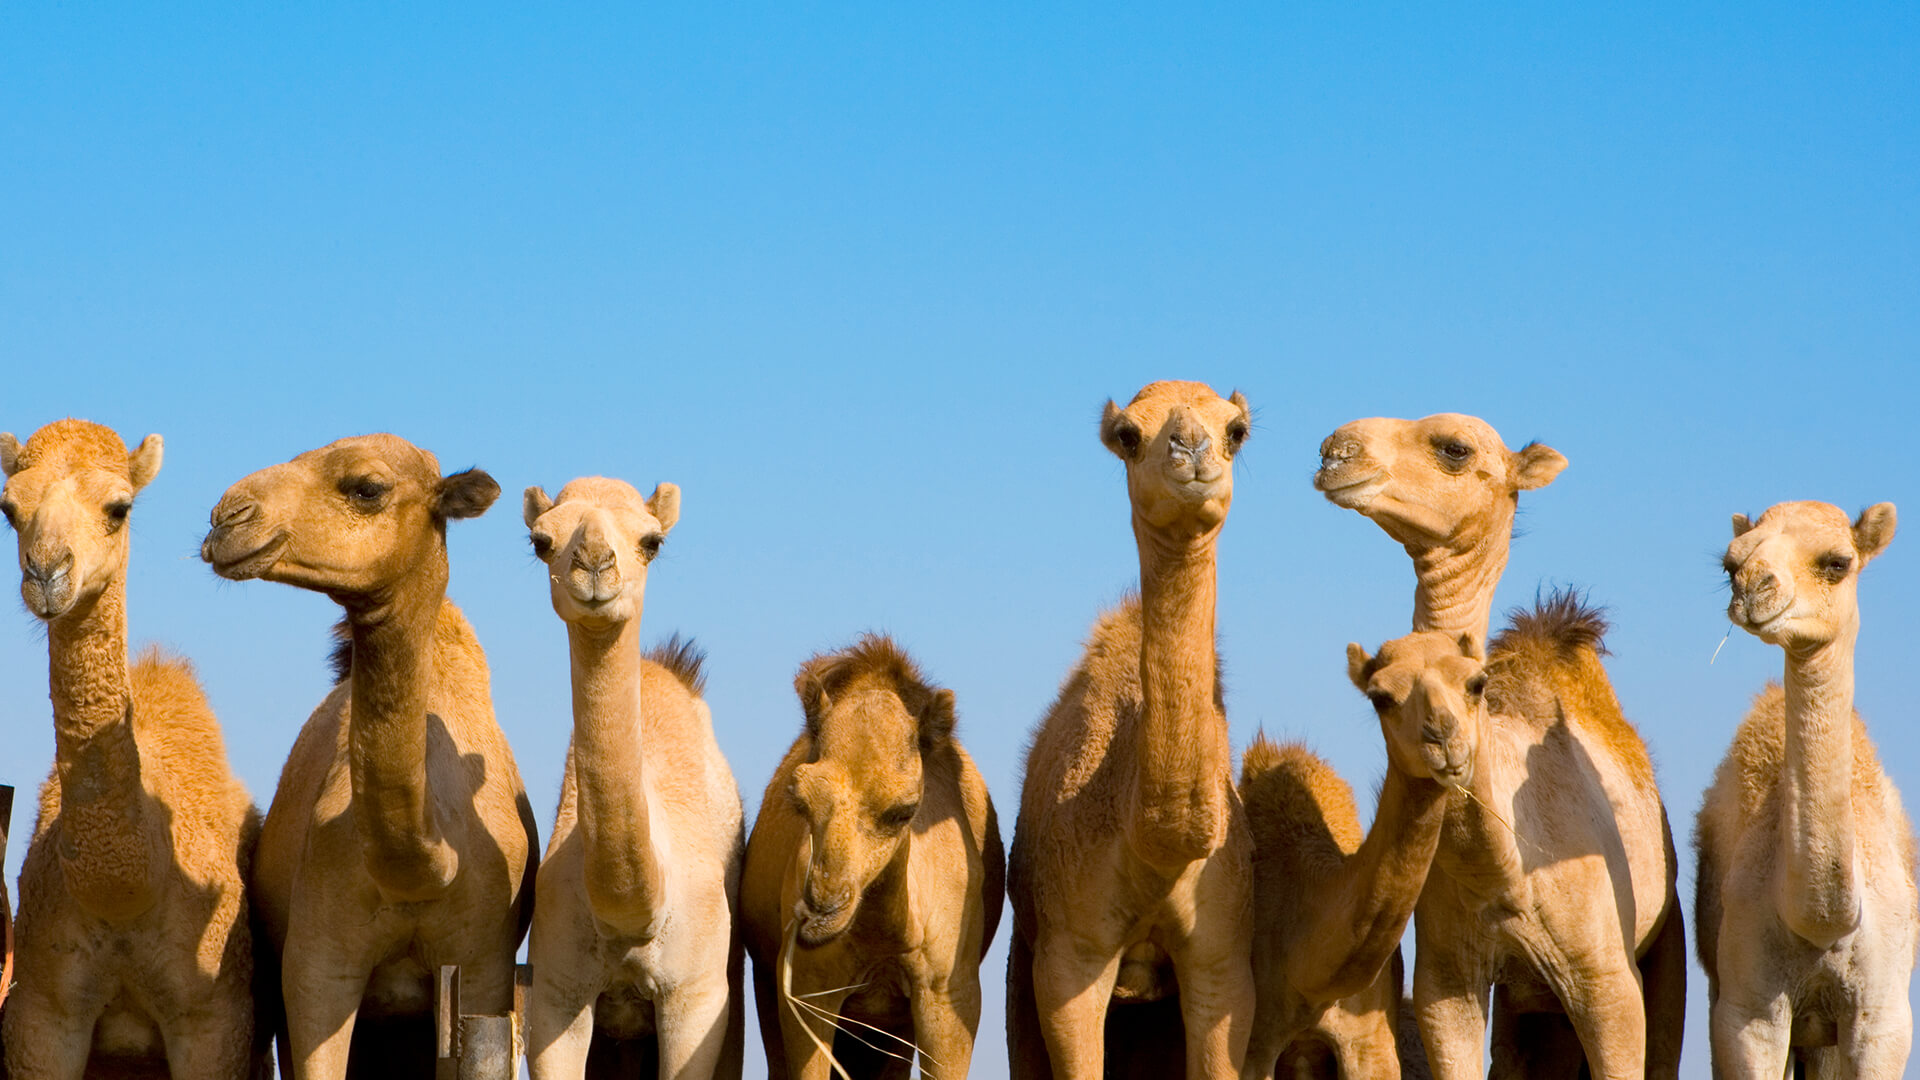 Camel | San Diego Zoo Animals & Plants